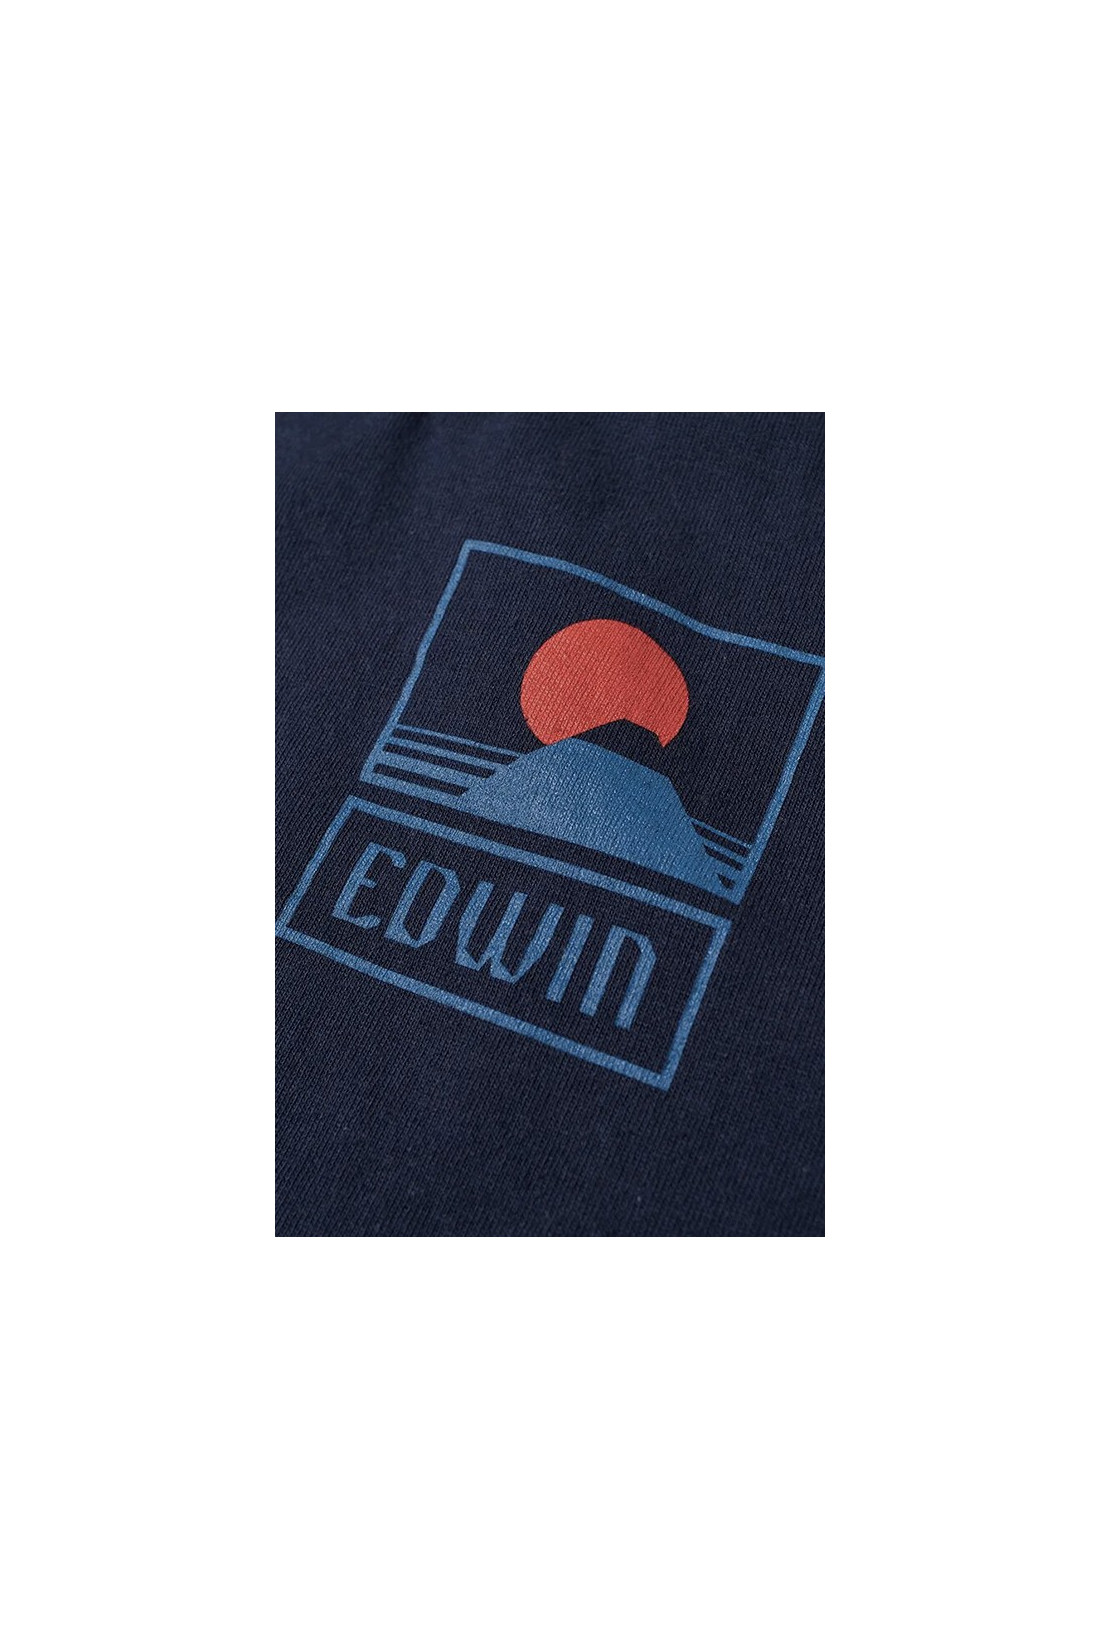 EDWIN / Sunset on mt fuji t-shirt Navy